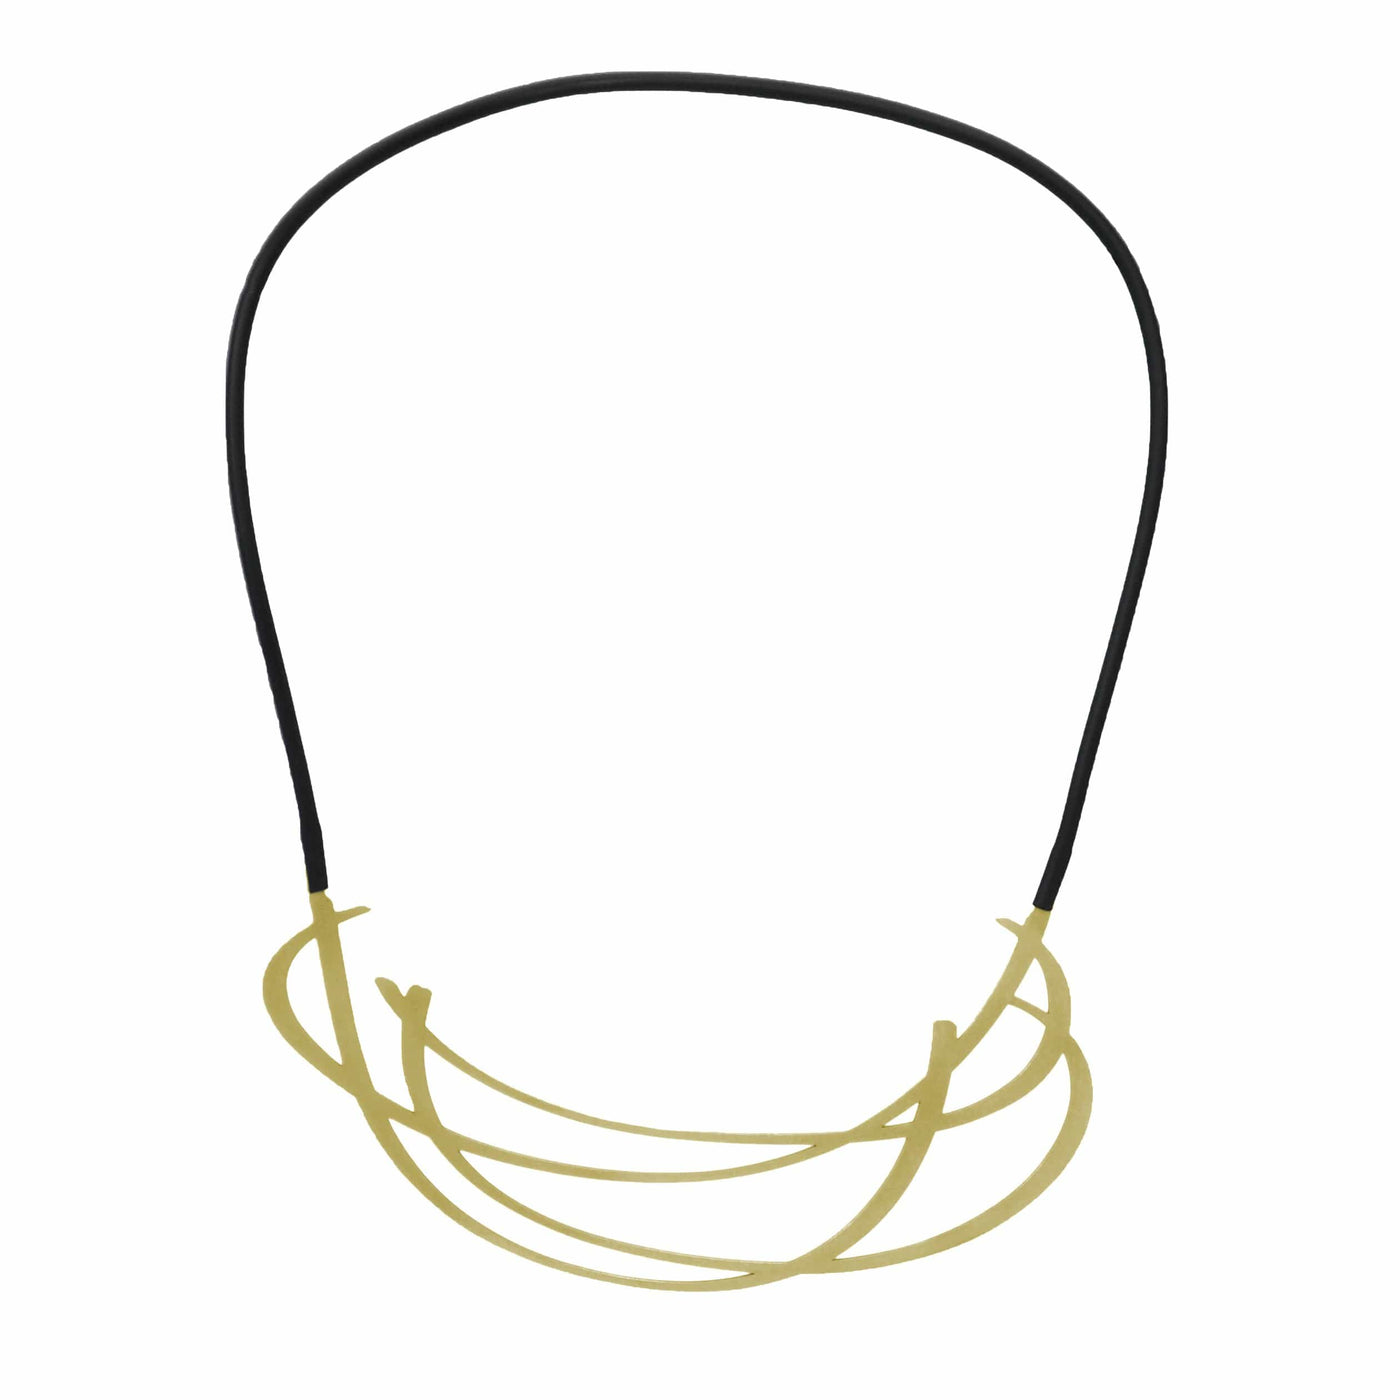 Huddle Necklace - Black - inSync design